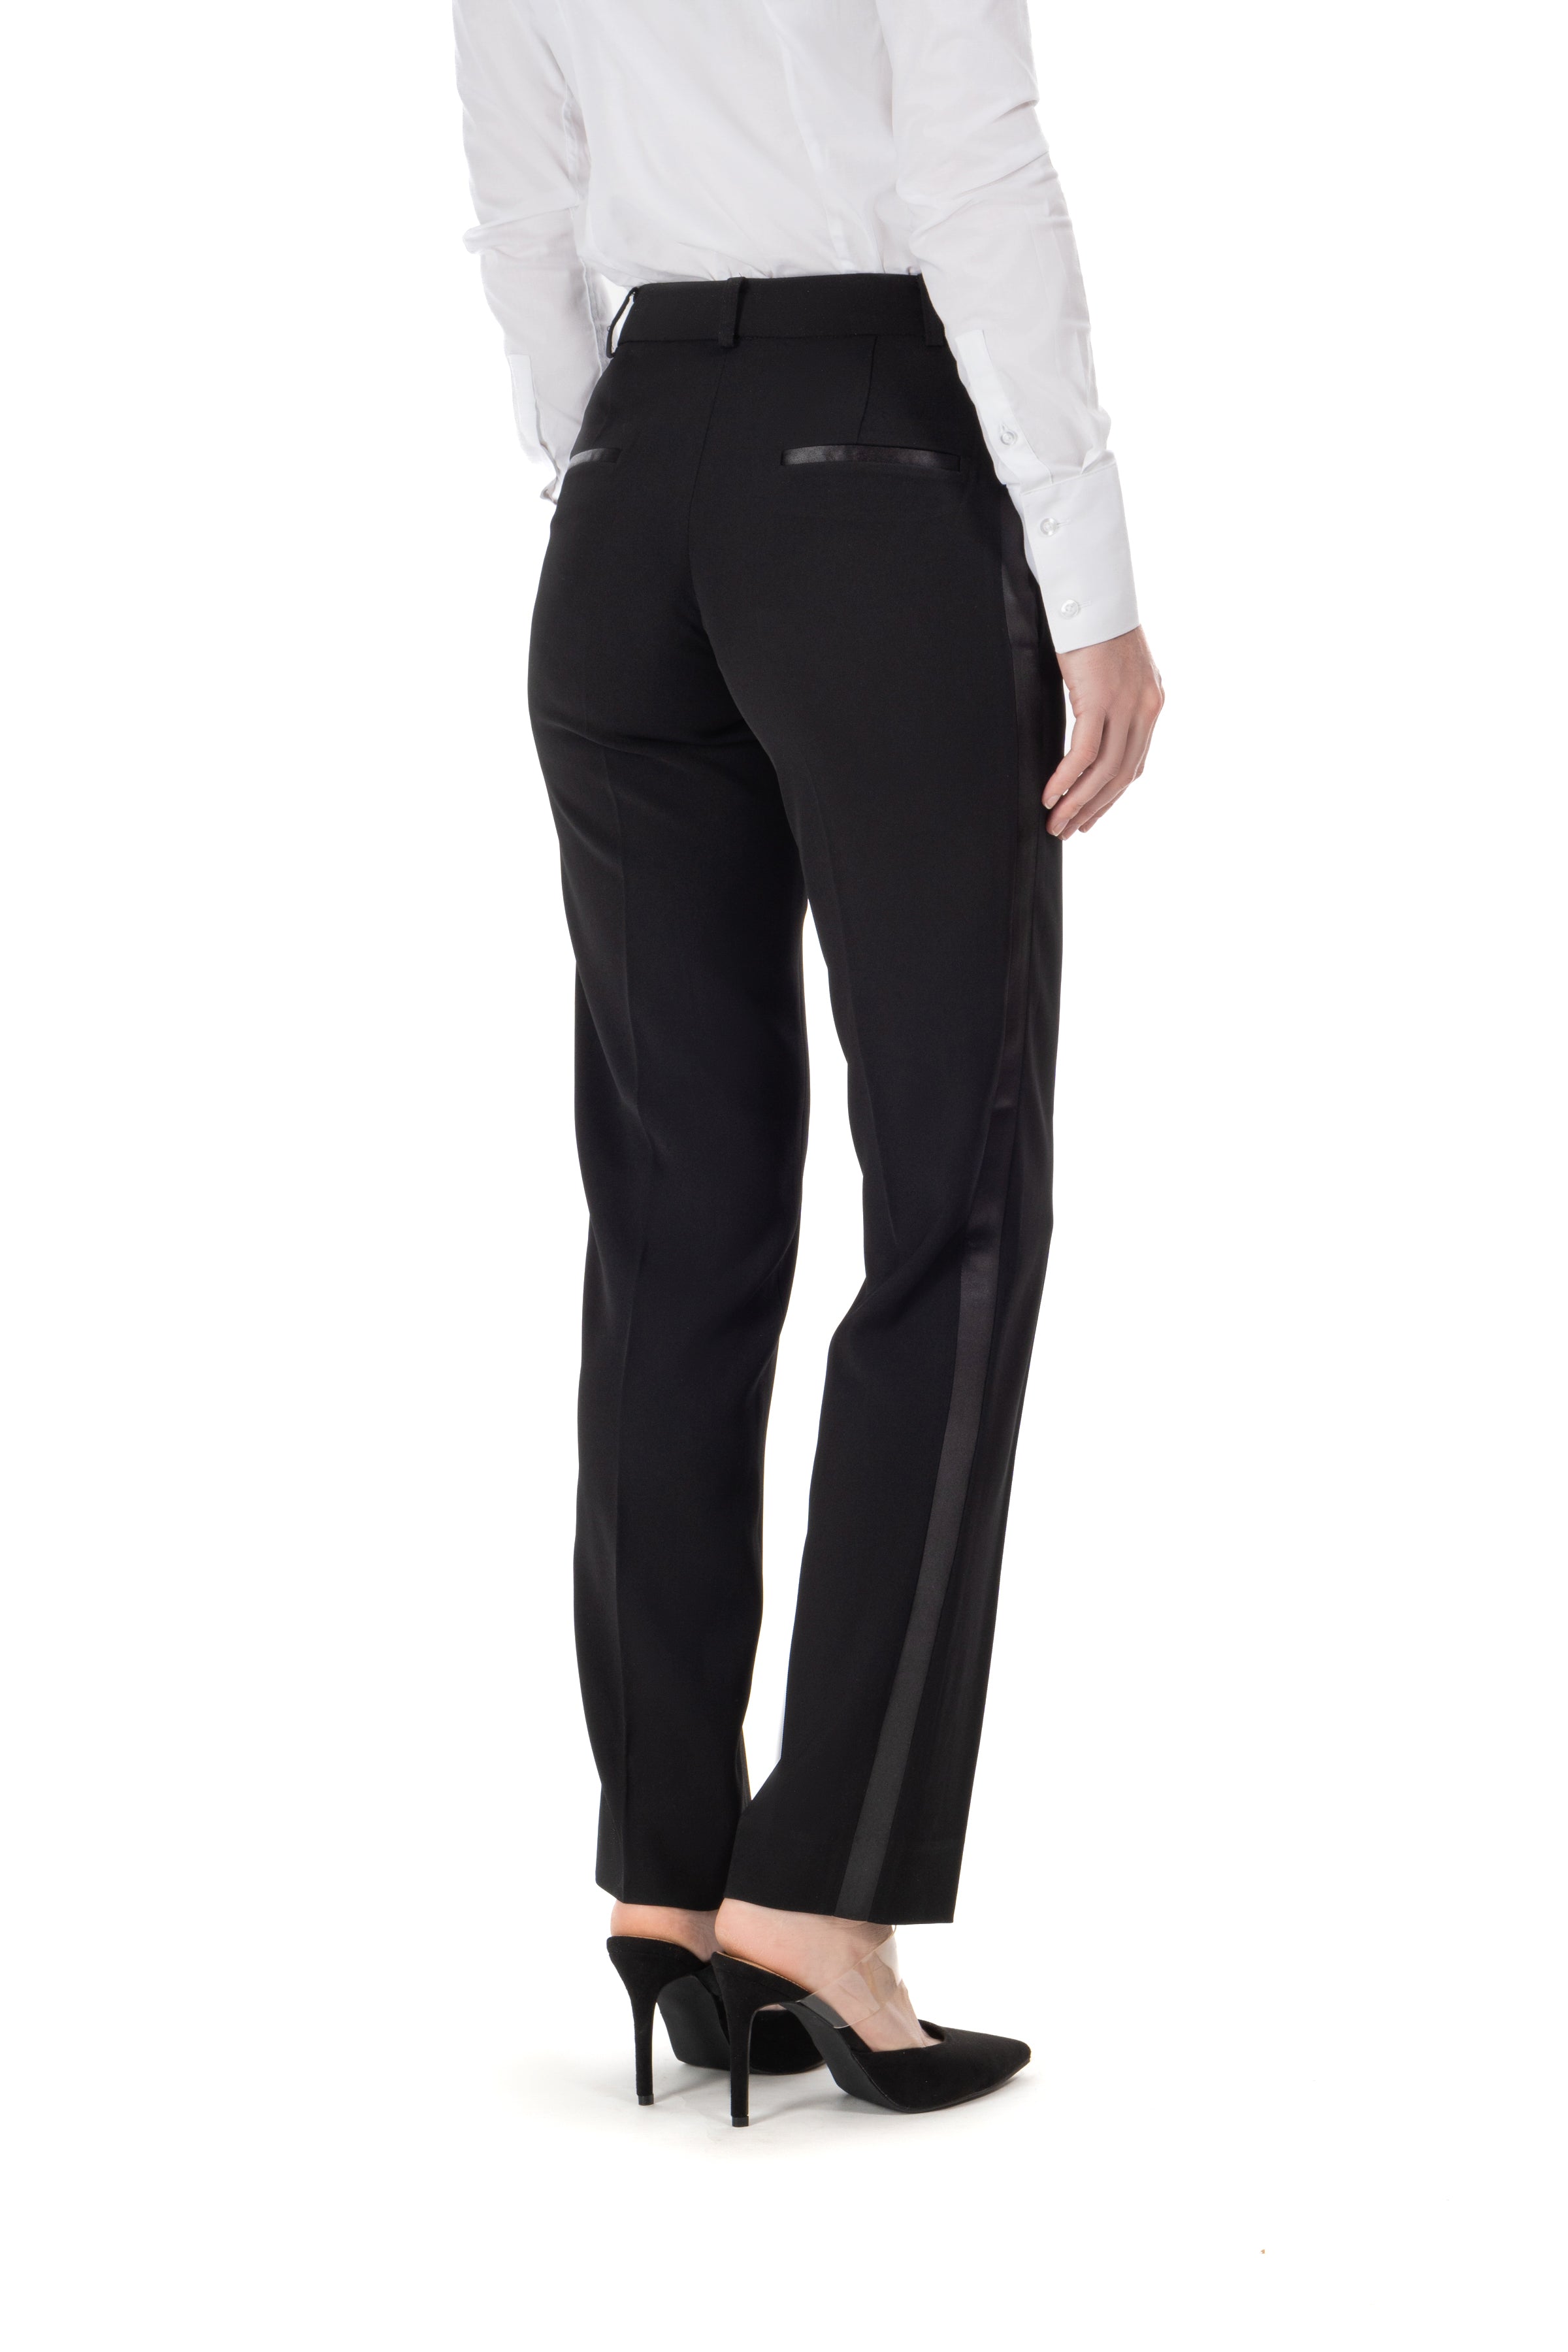 Women's Smythe Black Pants | Nordstrom